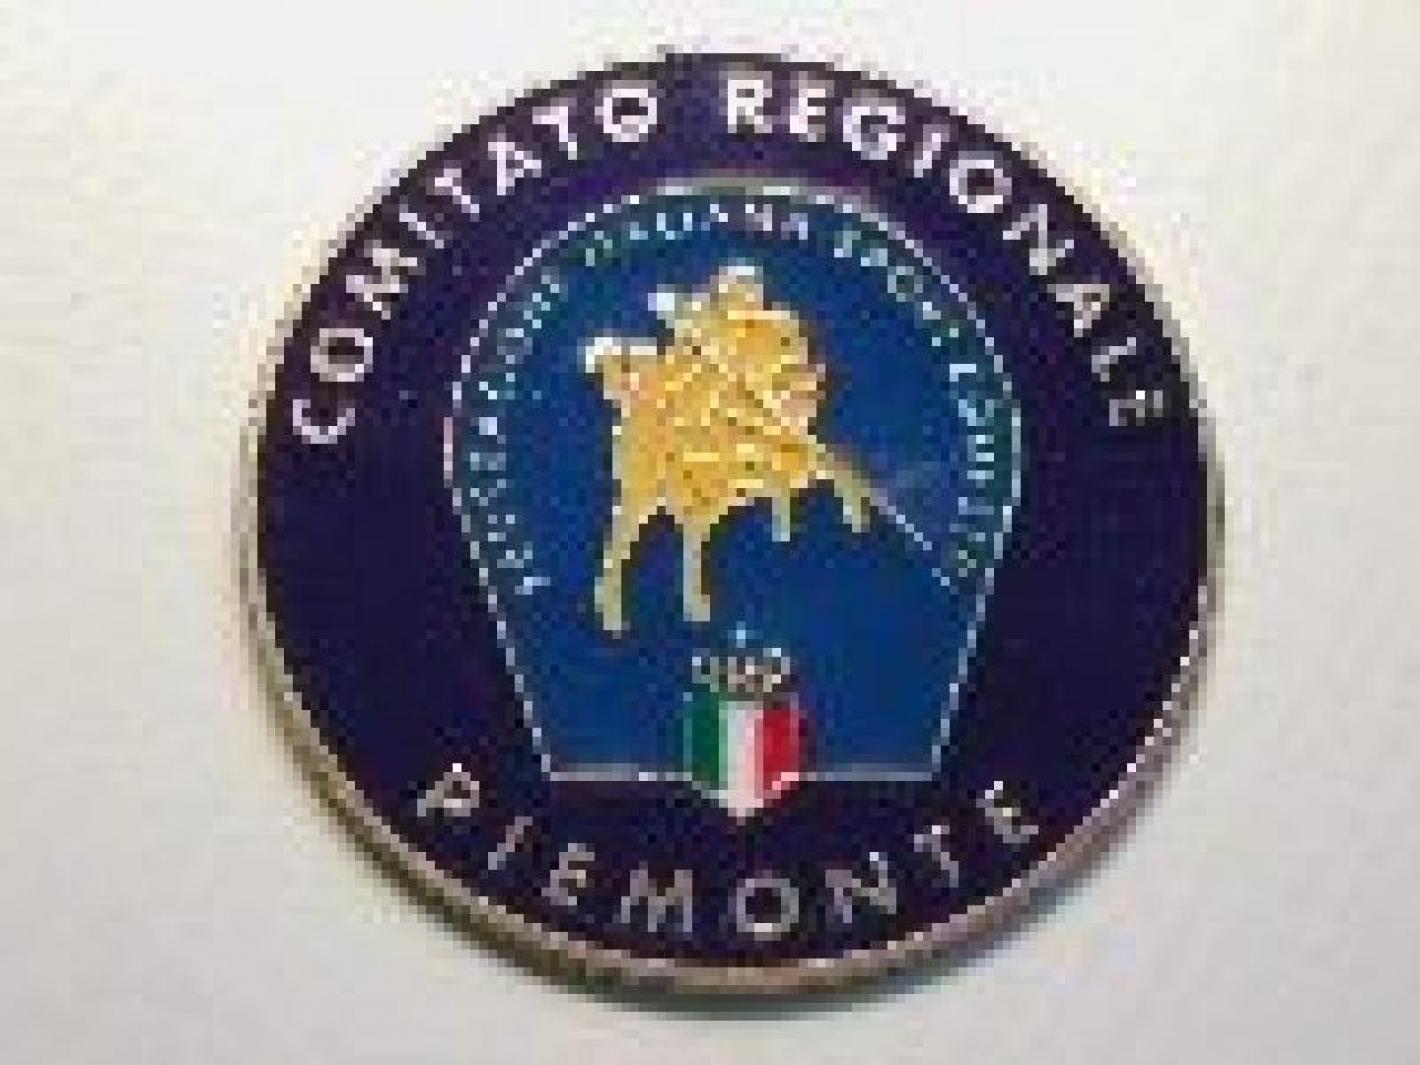 images/piemonte/small/medium/Piemonte_2.jpg